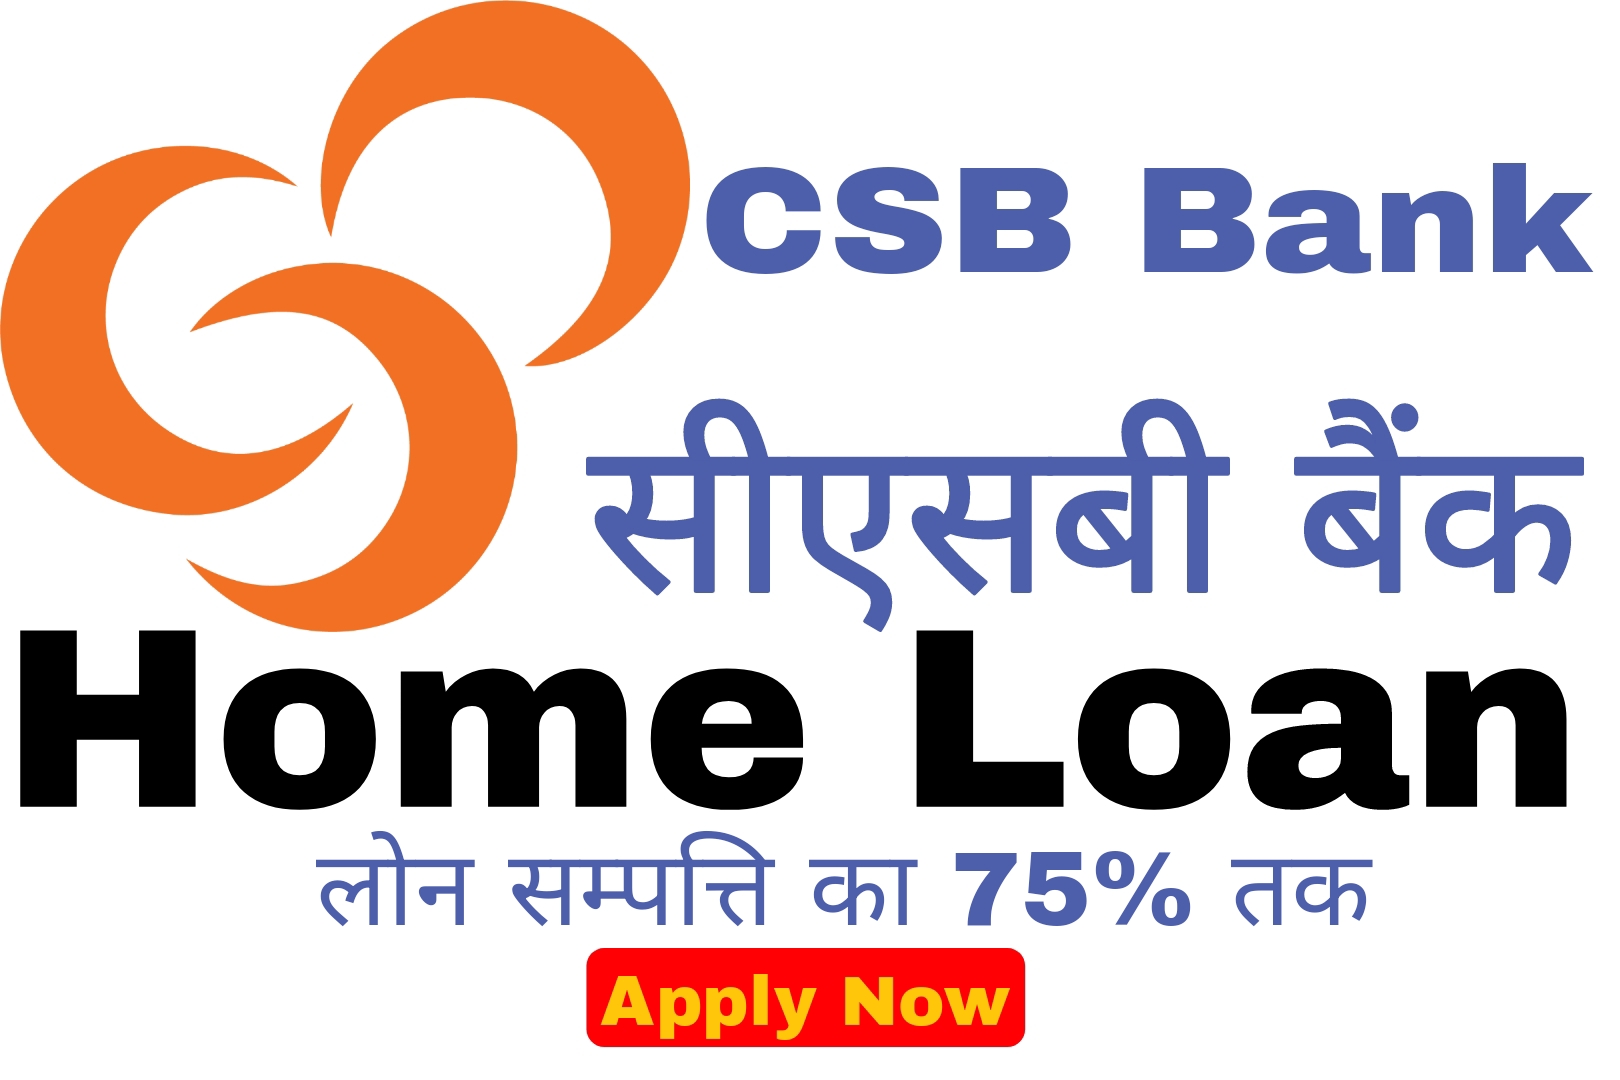 CSB Bank Home Loan